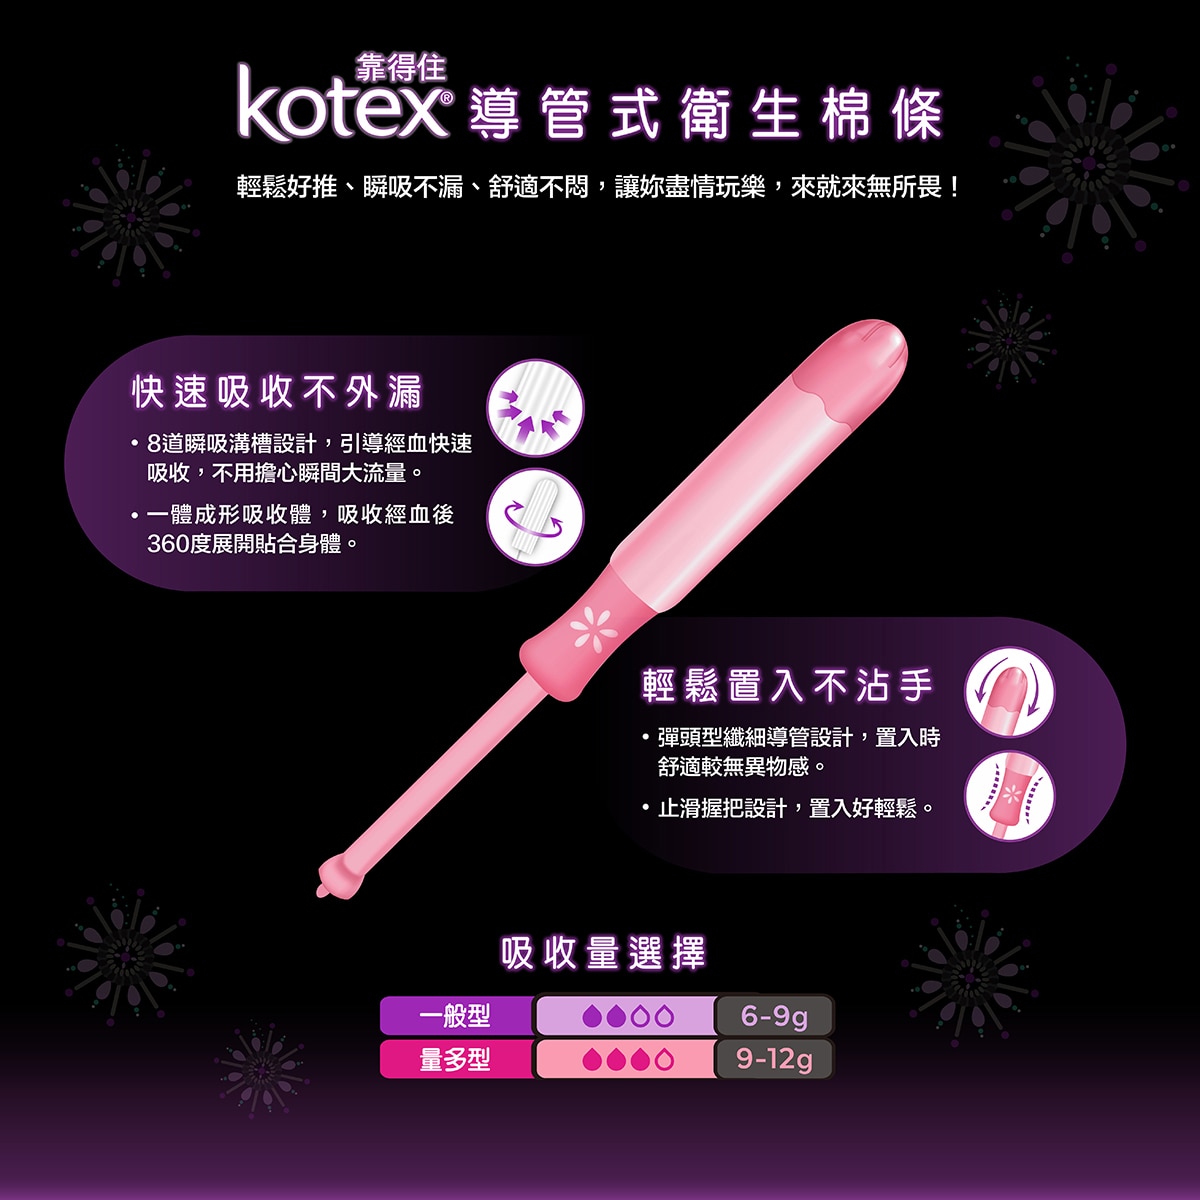 Kotex 導管式衛生棉條 一般型,快速吸收不外露,輕鬆置入不沾手,吸收量選擇。